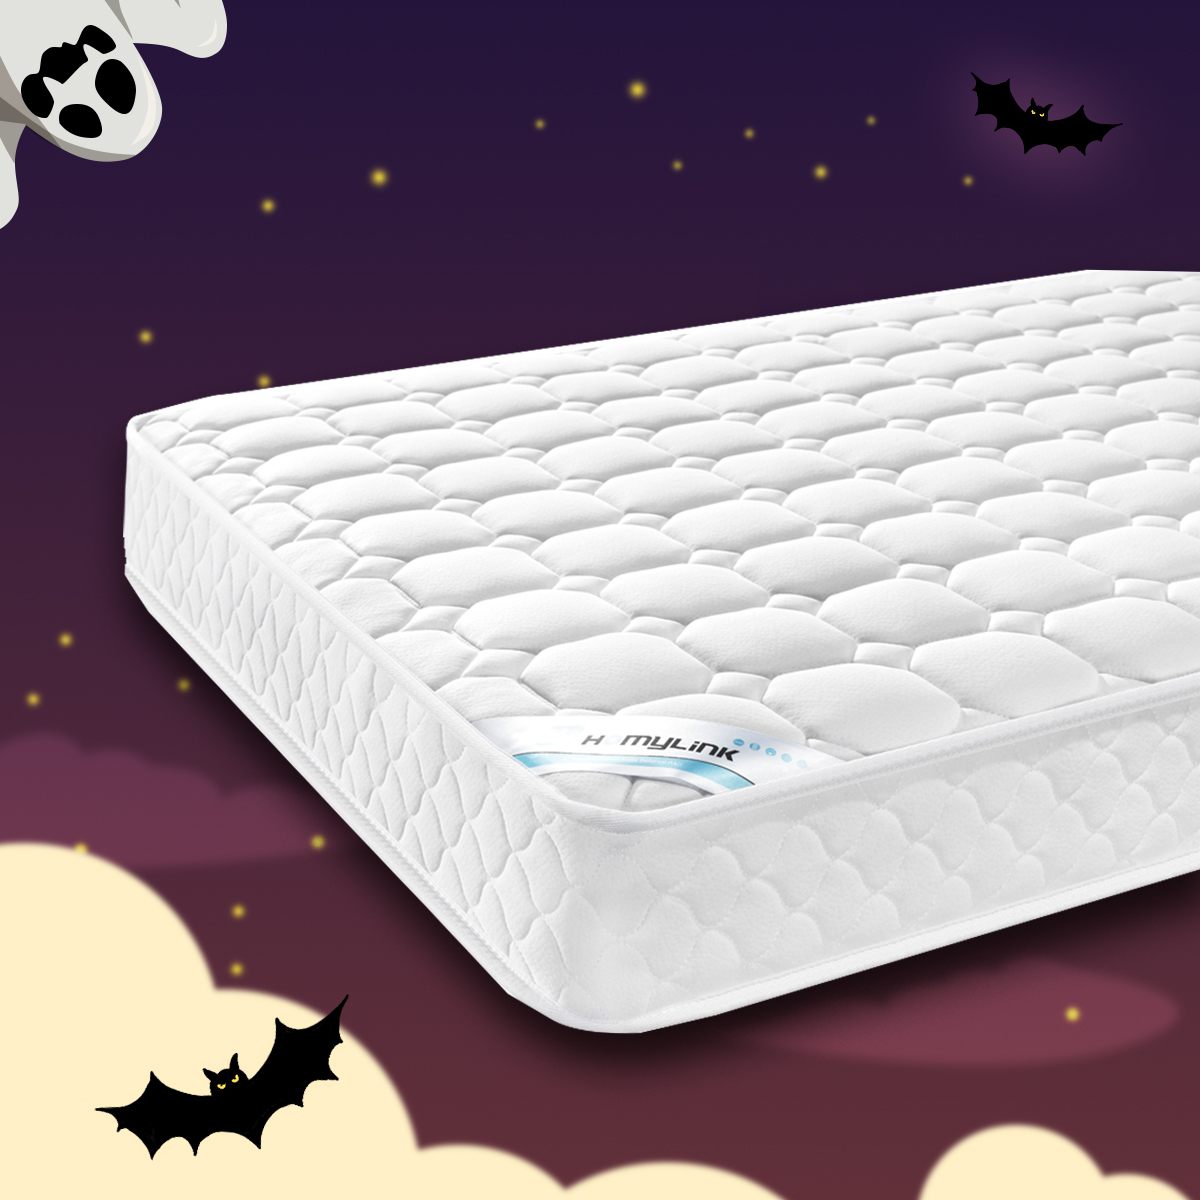 Homylink Halloween sale mattress